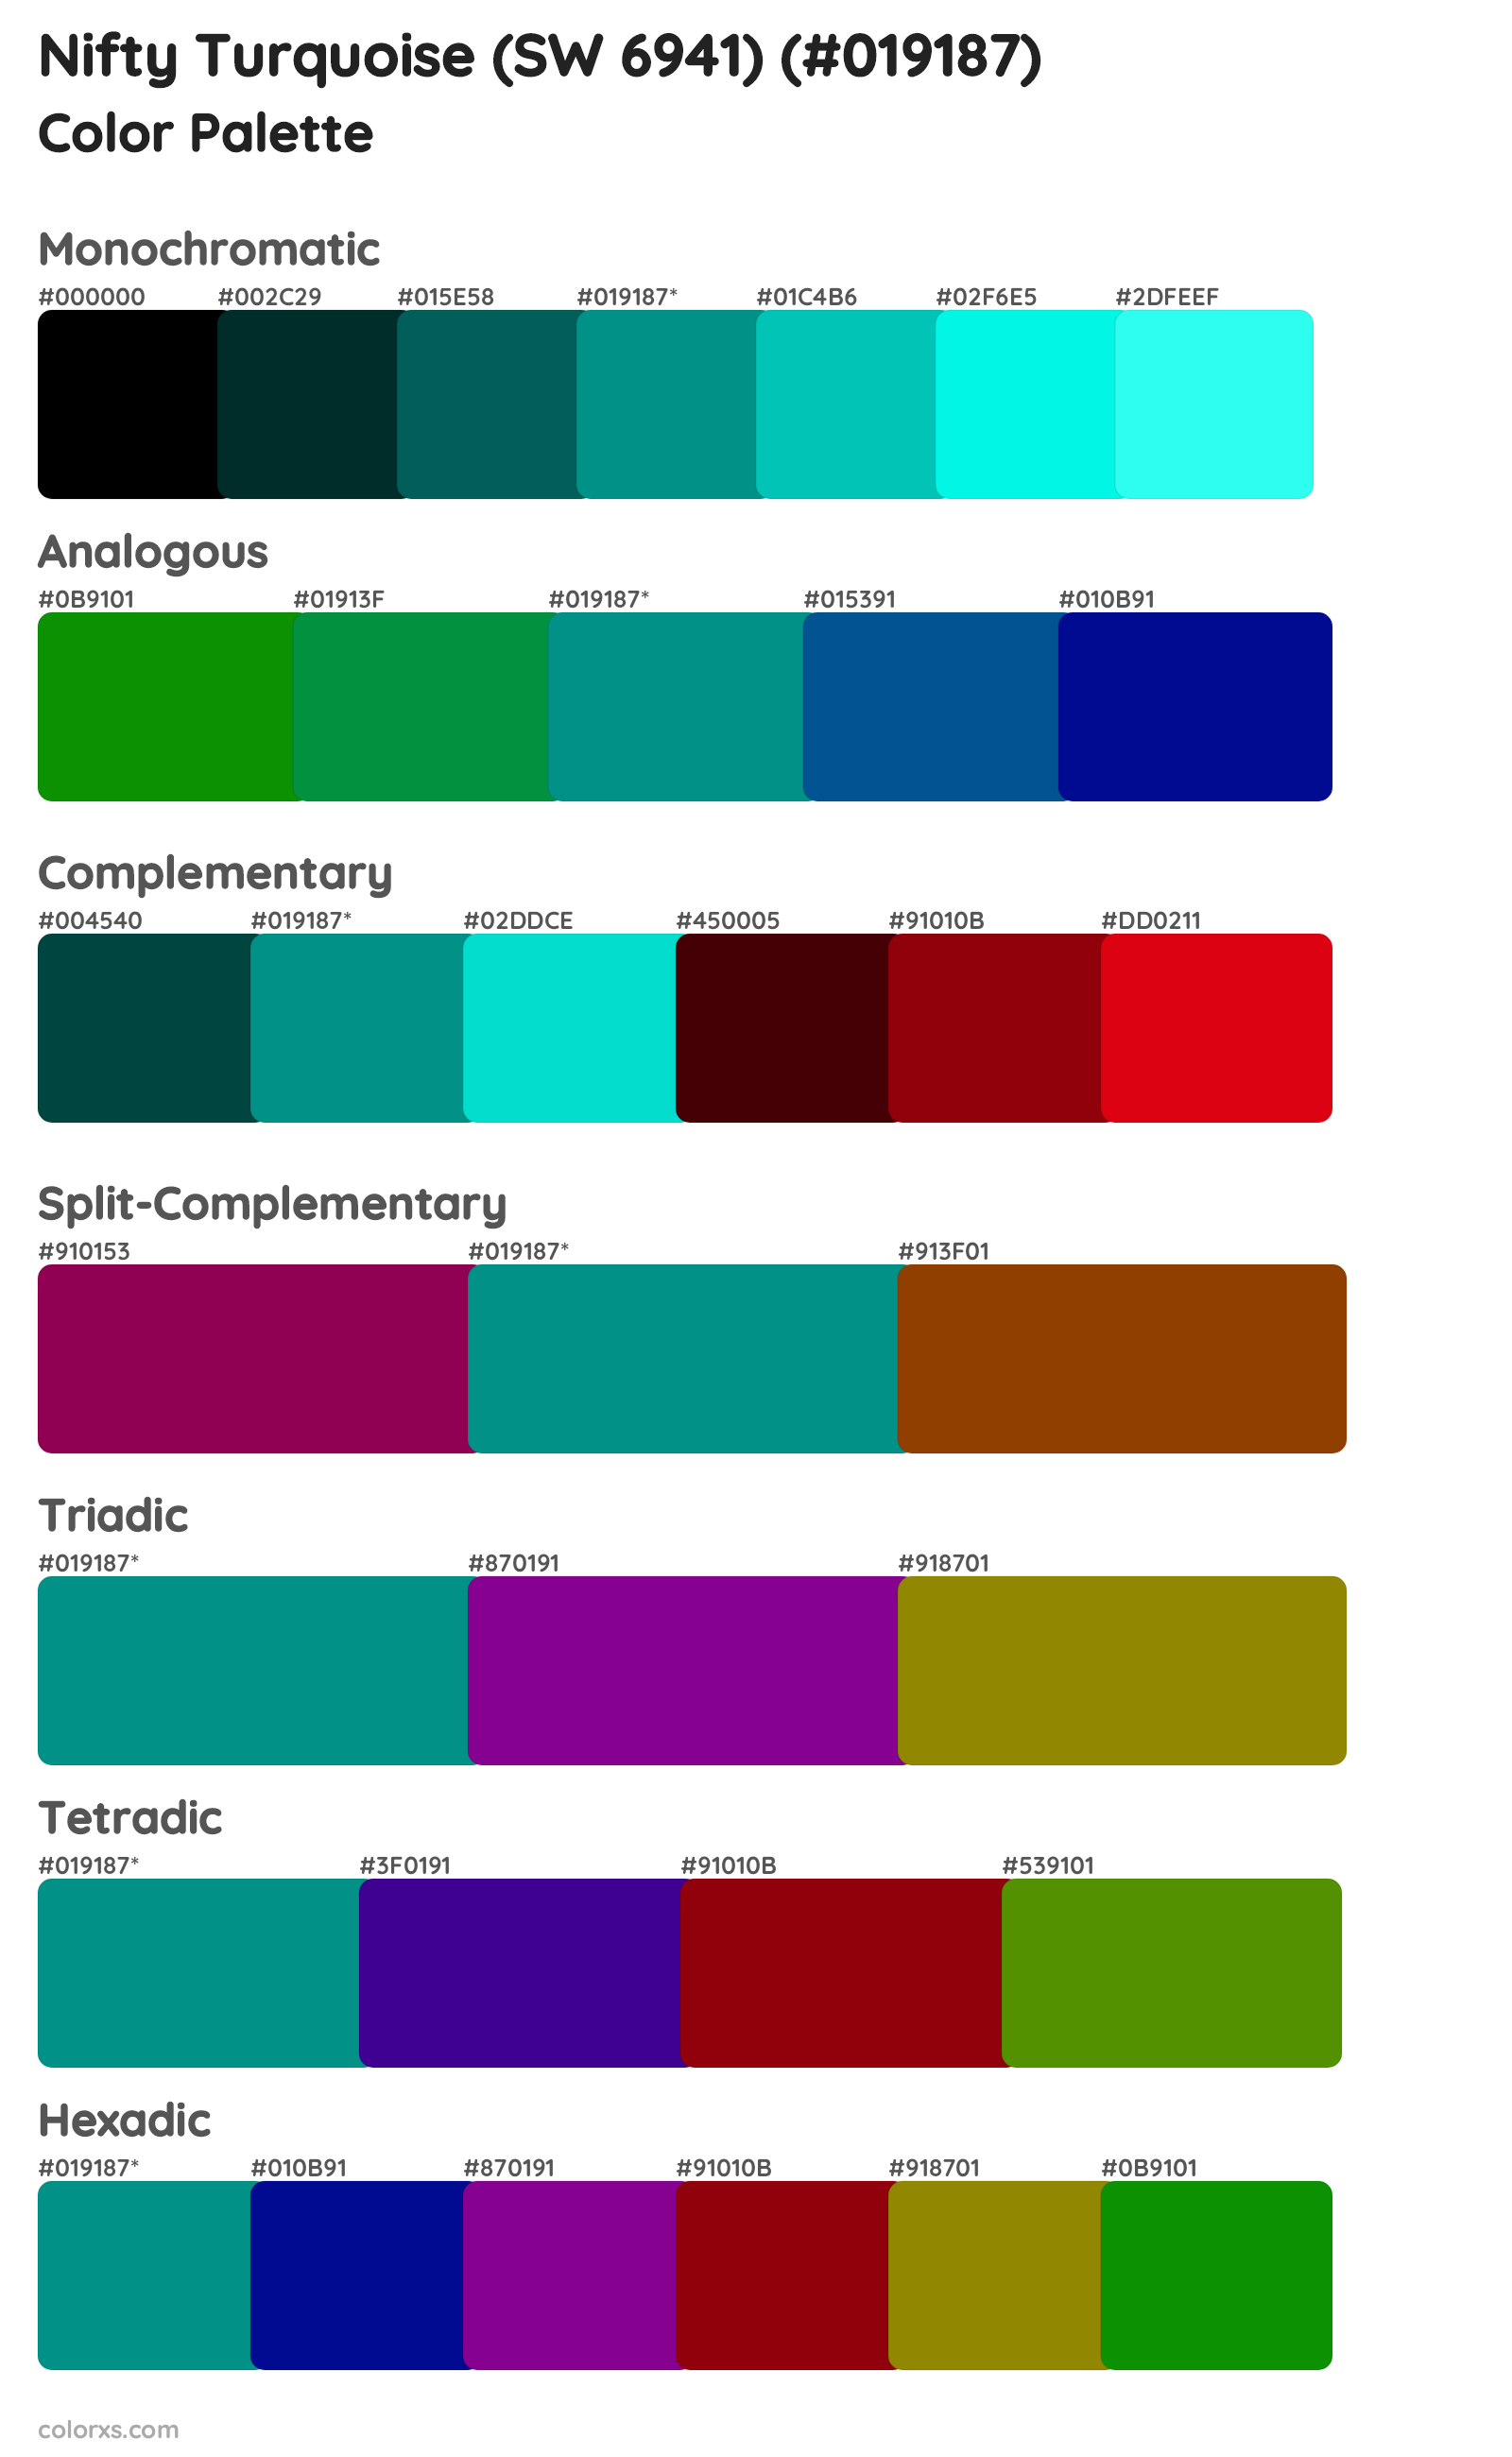 Nifty Turquoise (SW 6941) Color Scheme Palettes